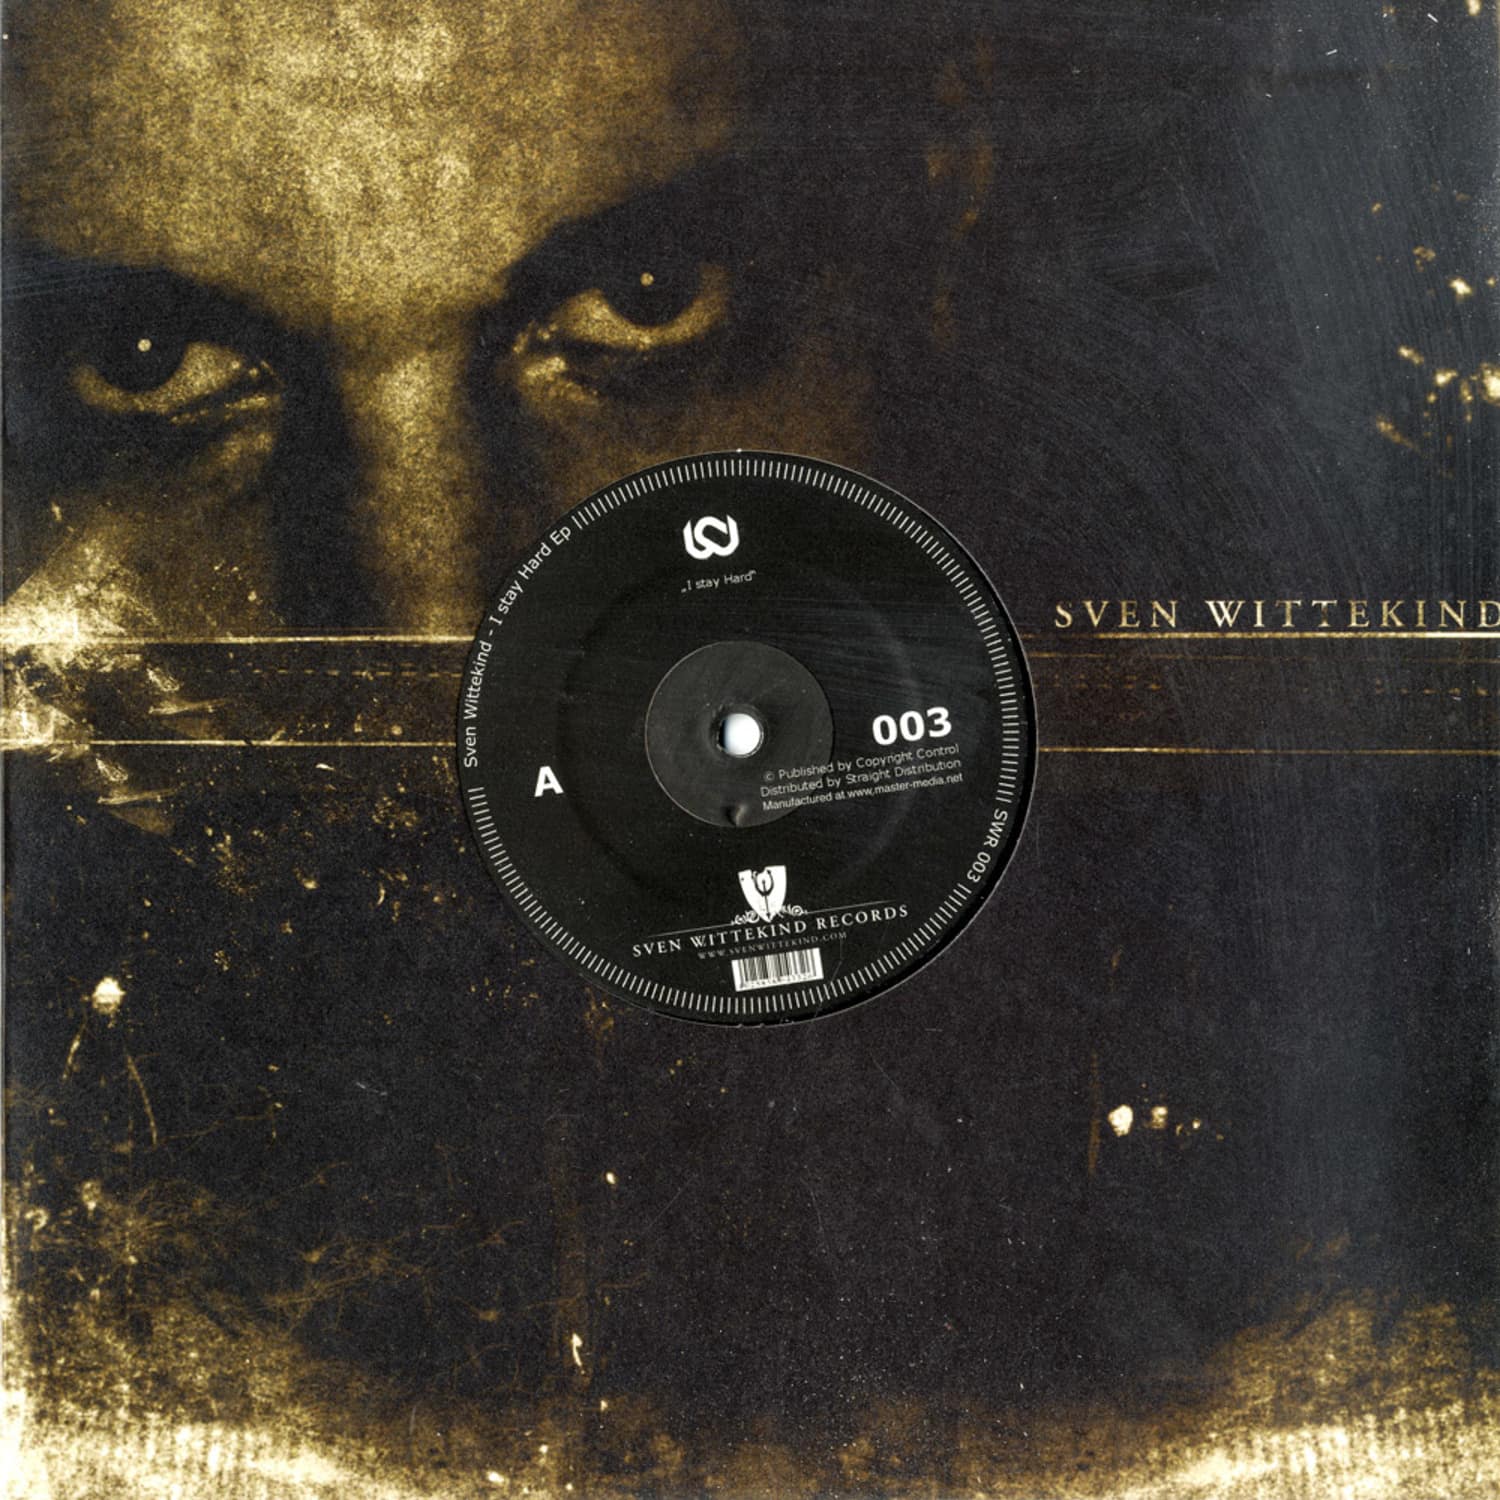 Sven Wittekind - I STAY HARD EP 